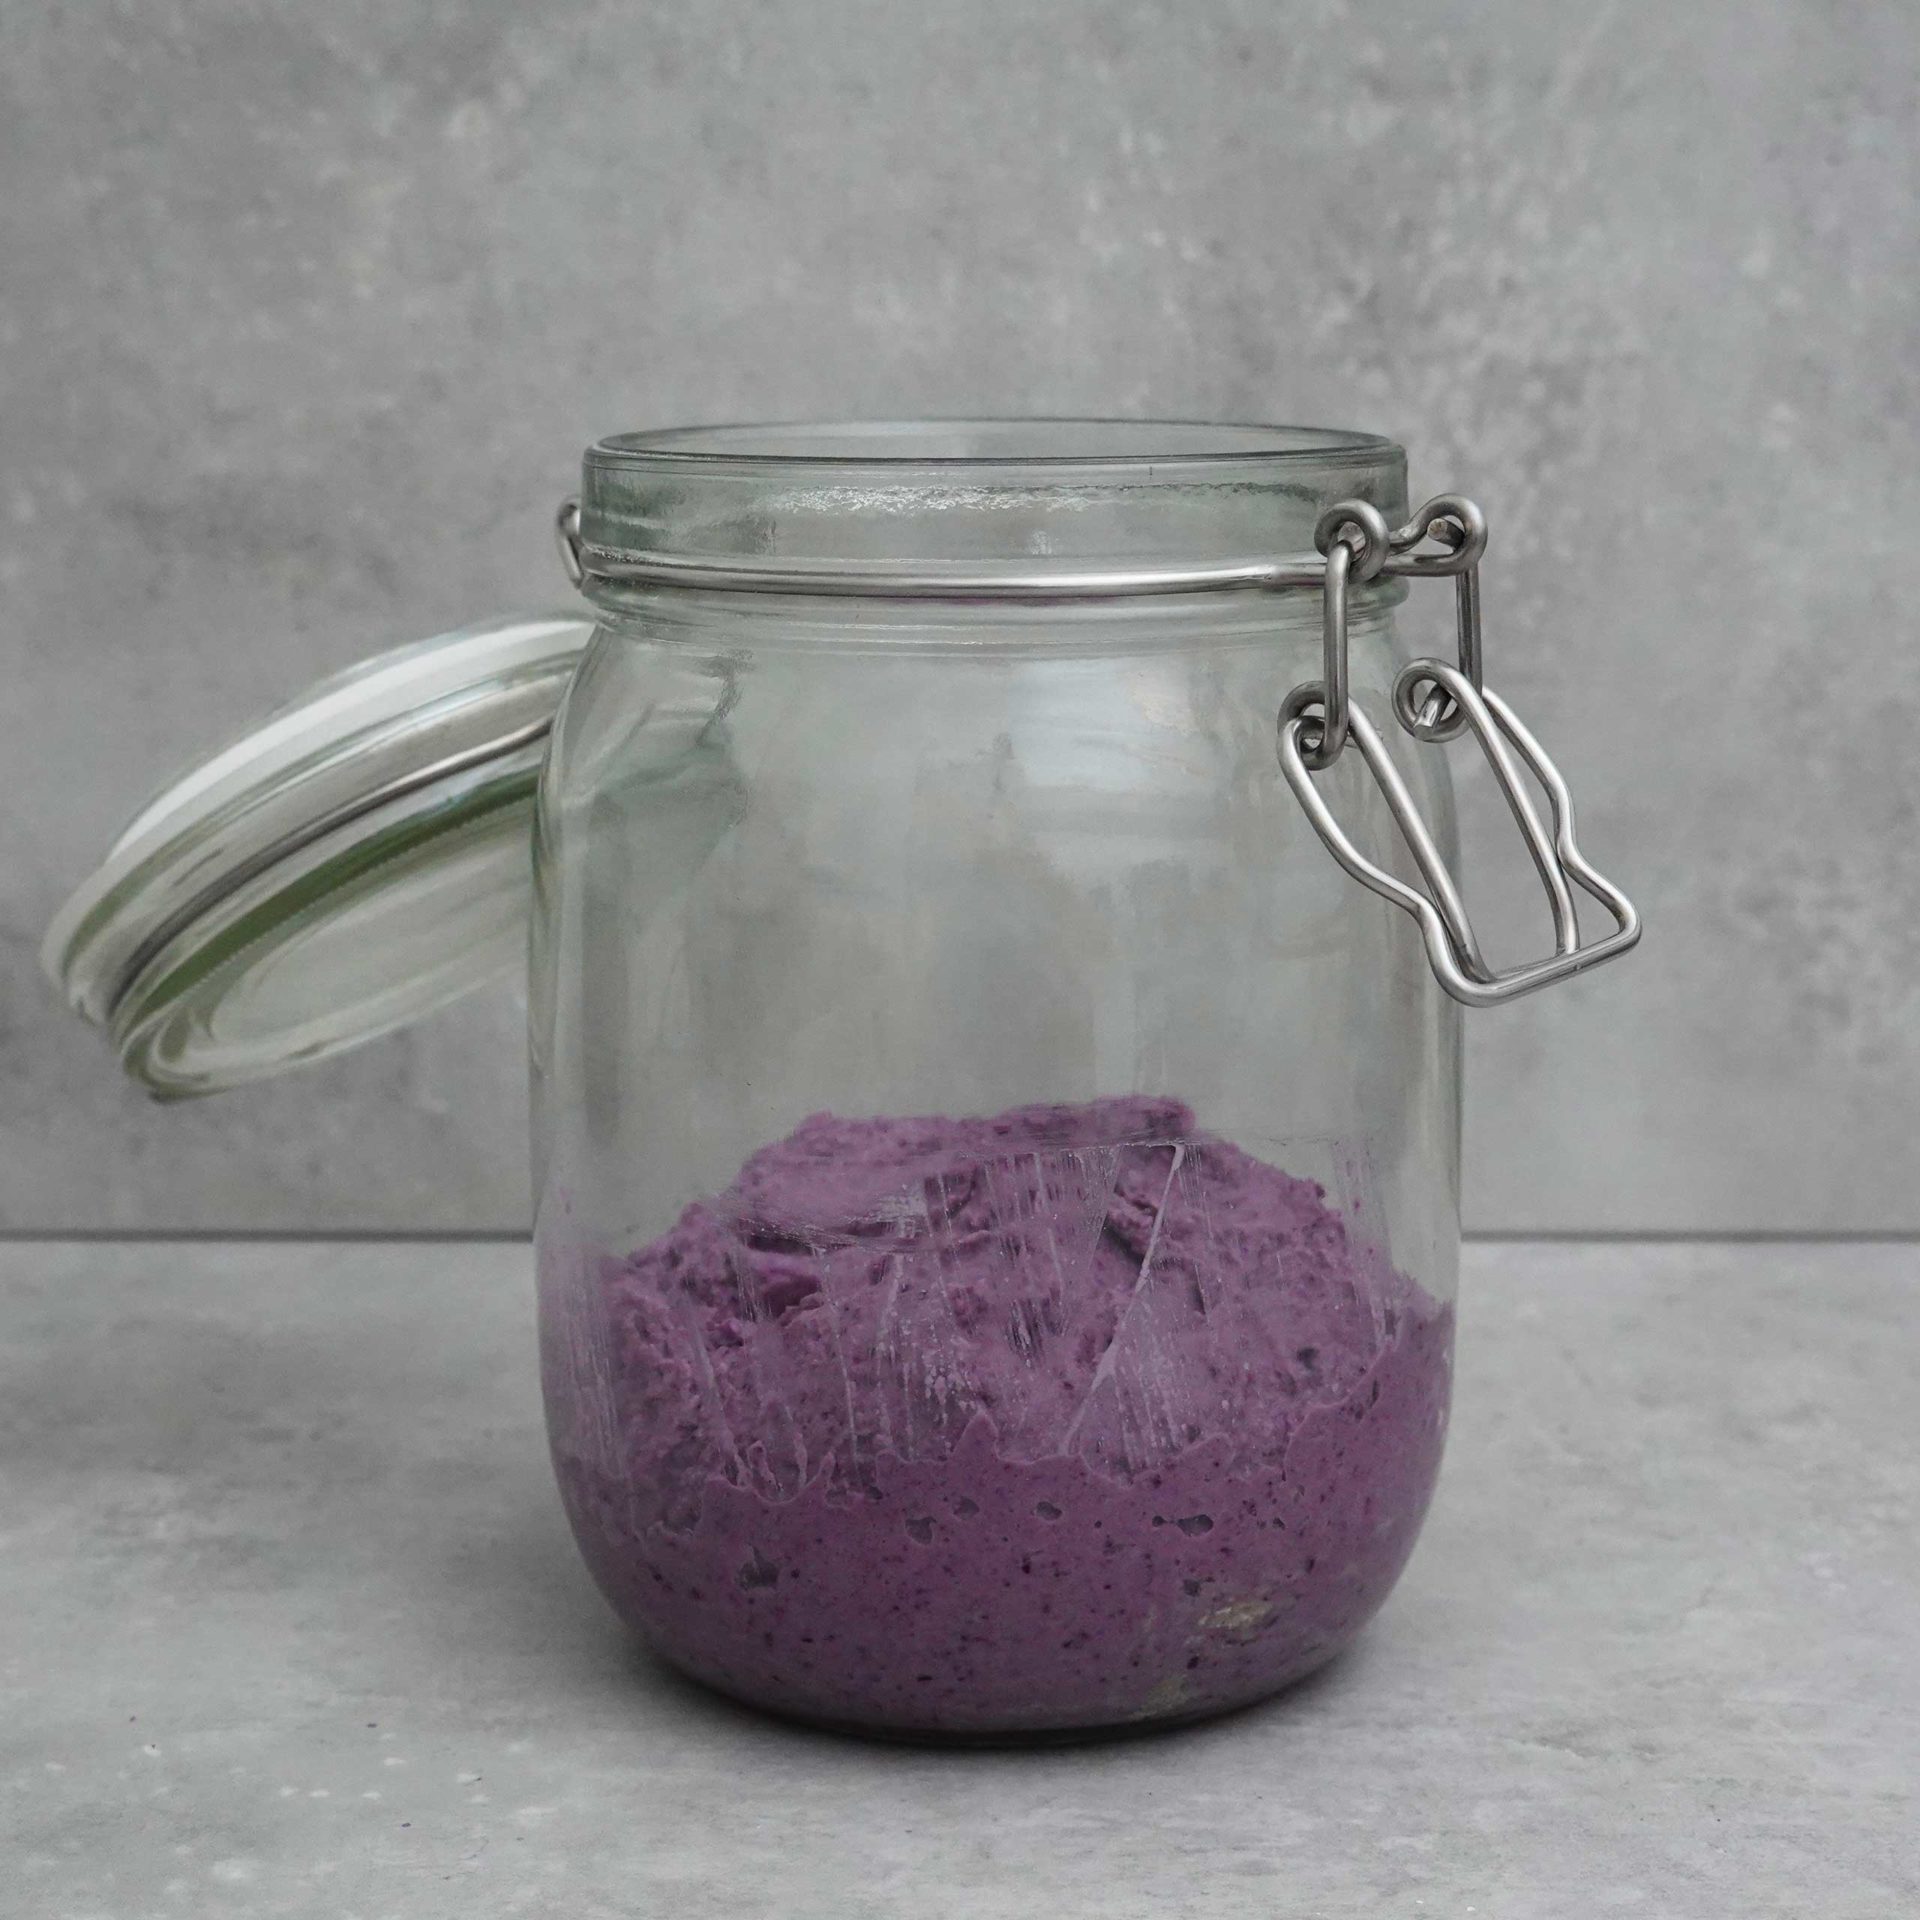 Red cabbage - purple sourdough in a jar